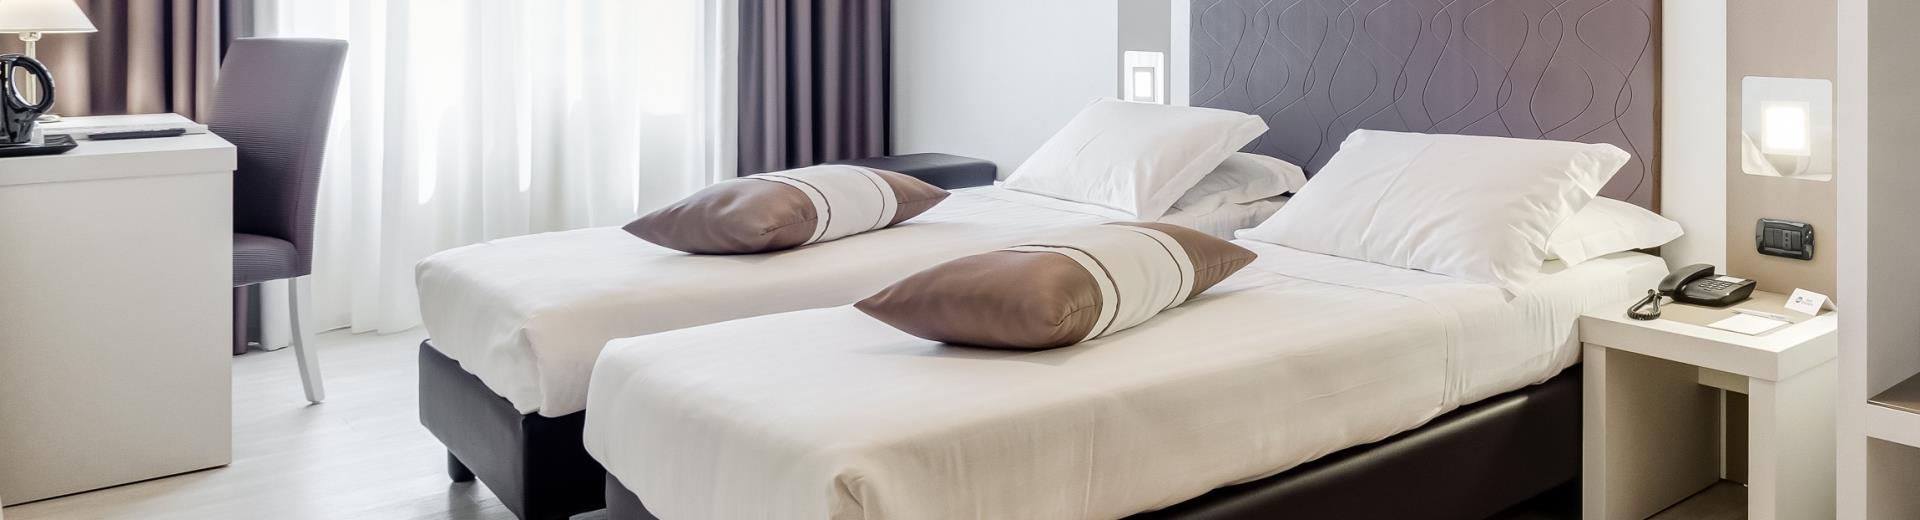 Camere confortevoli a Cassino: hotel 4 stelle, Best Western Hotel Rocca